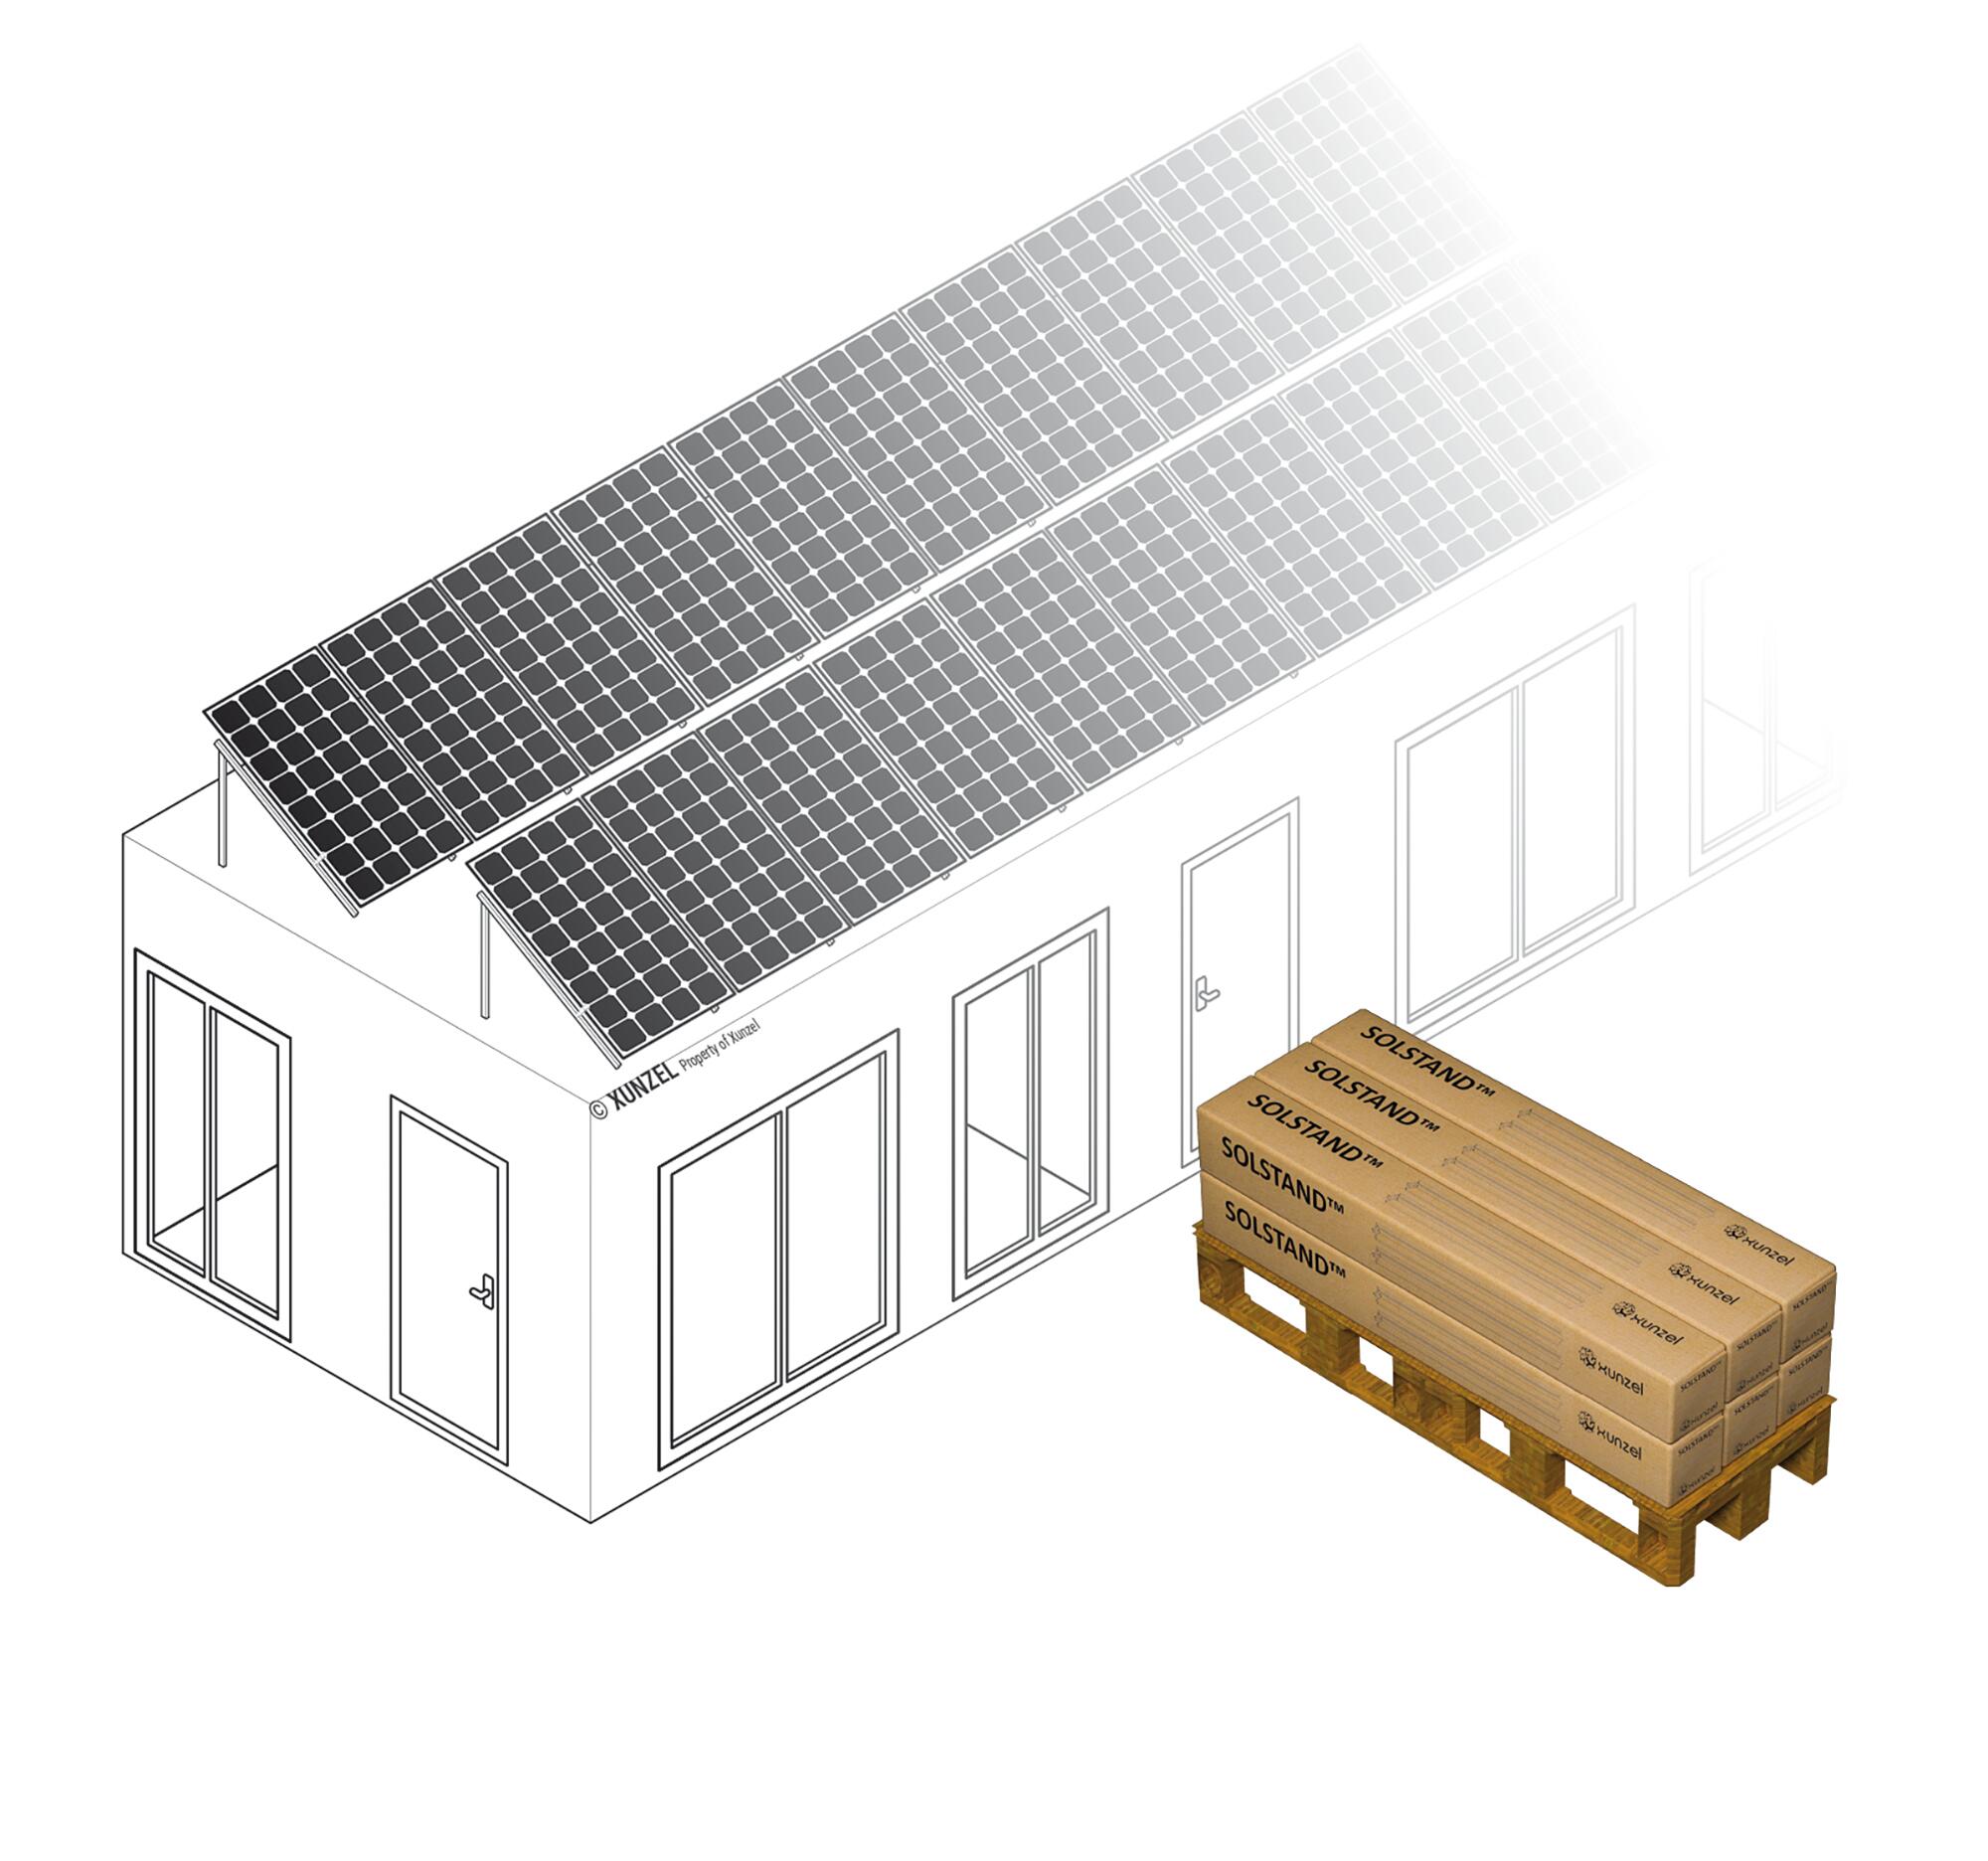 Soporte suelo/cubierta plana solstand-16g-xxl para 16 paneles solarpower-425w